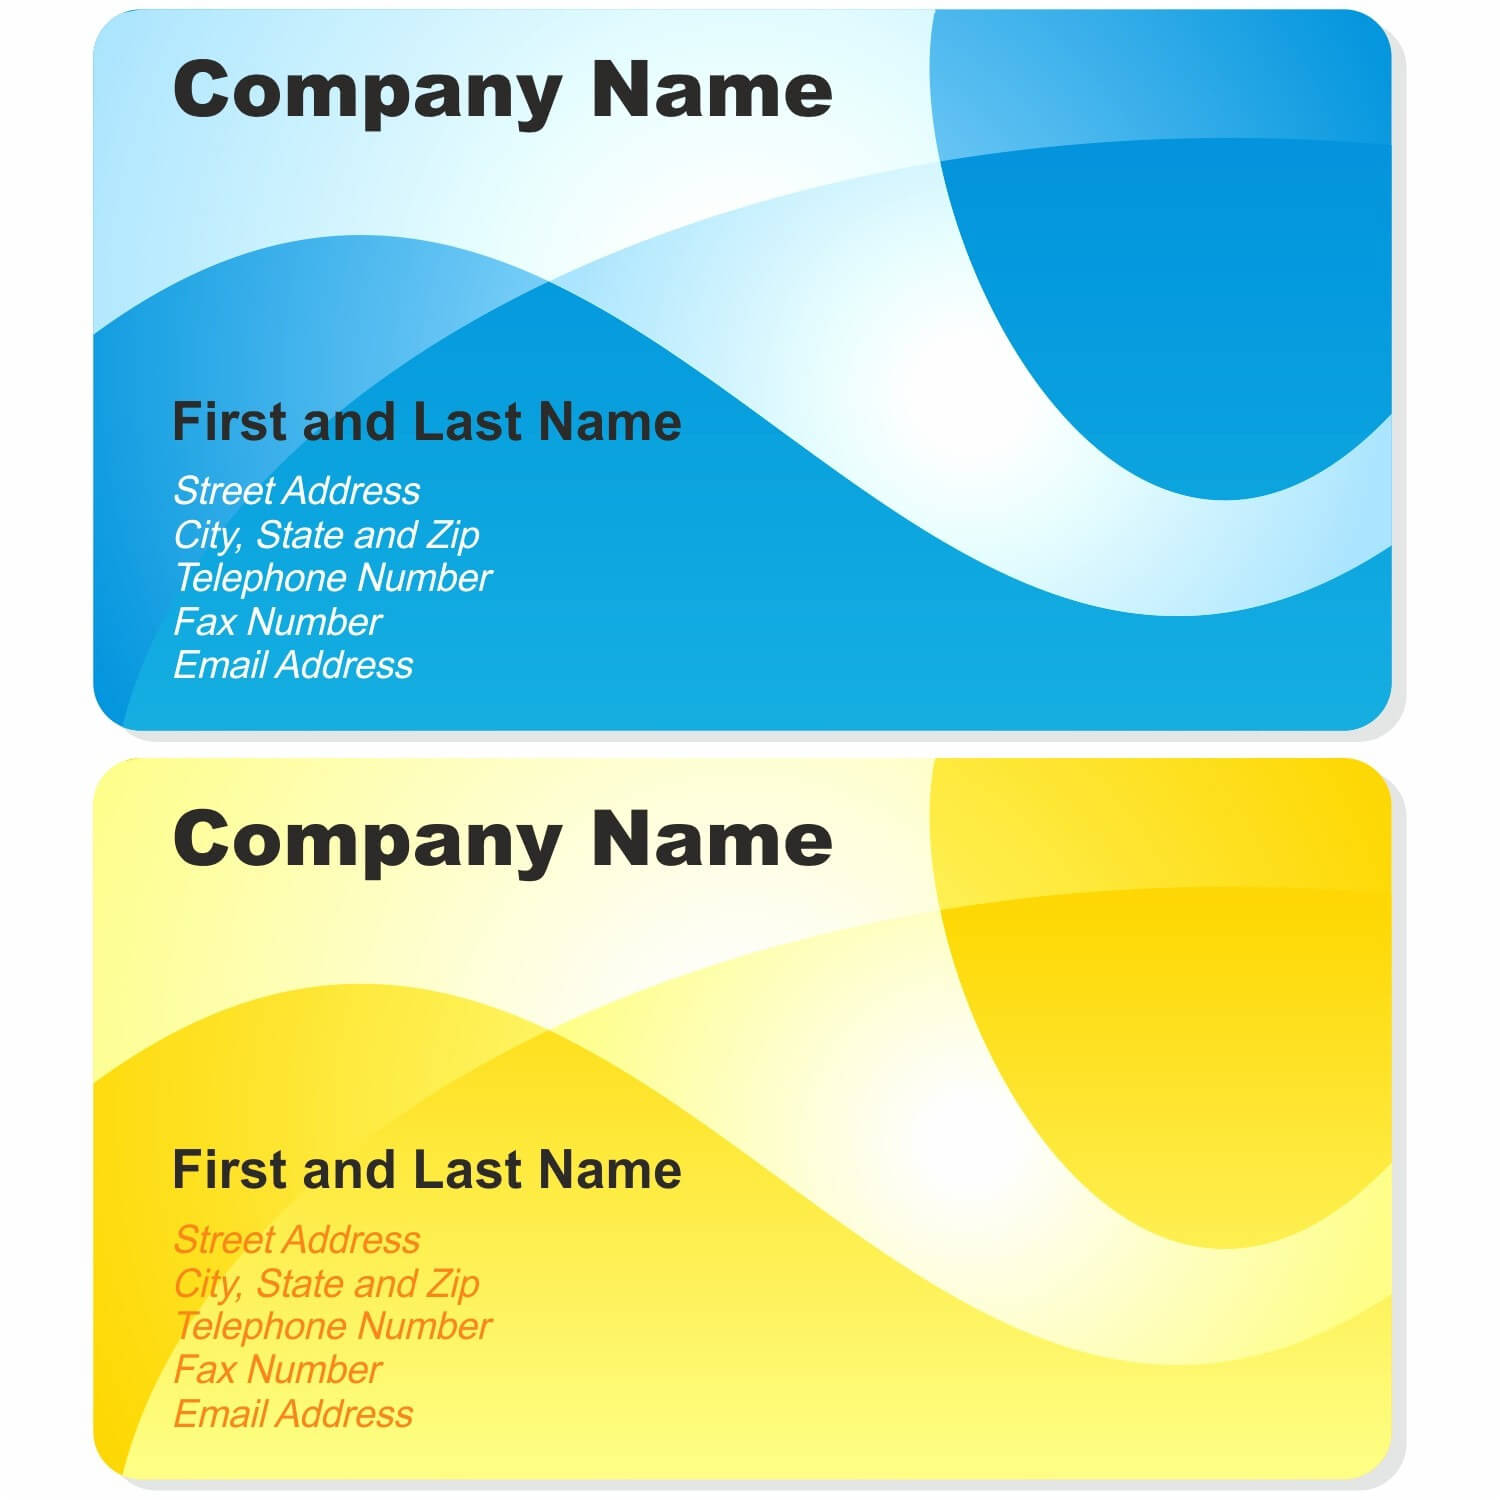 Rodan And Fields Business Card Template Professional Vector Throughout Rodan And Fields Business Card Template